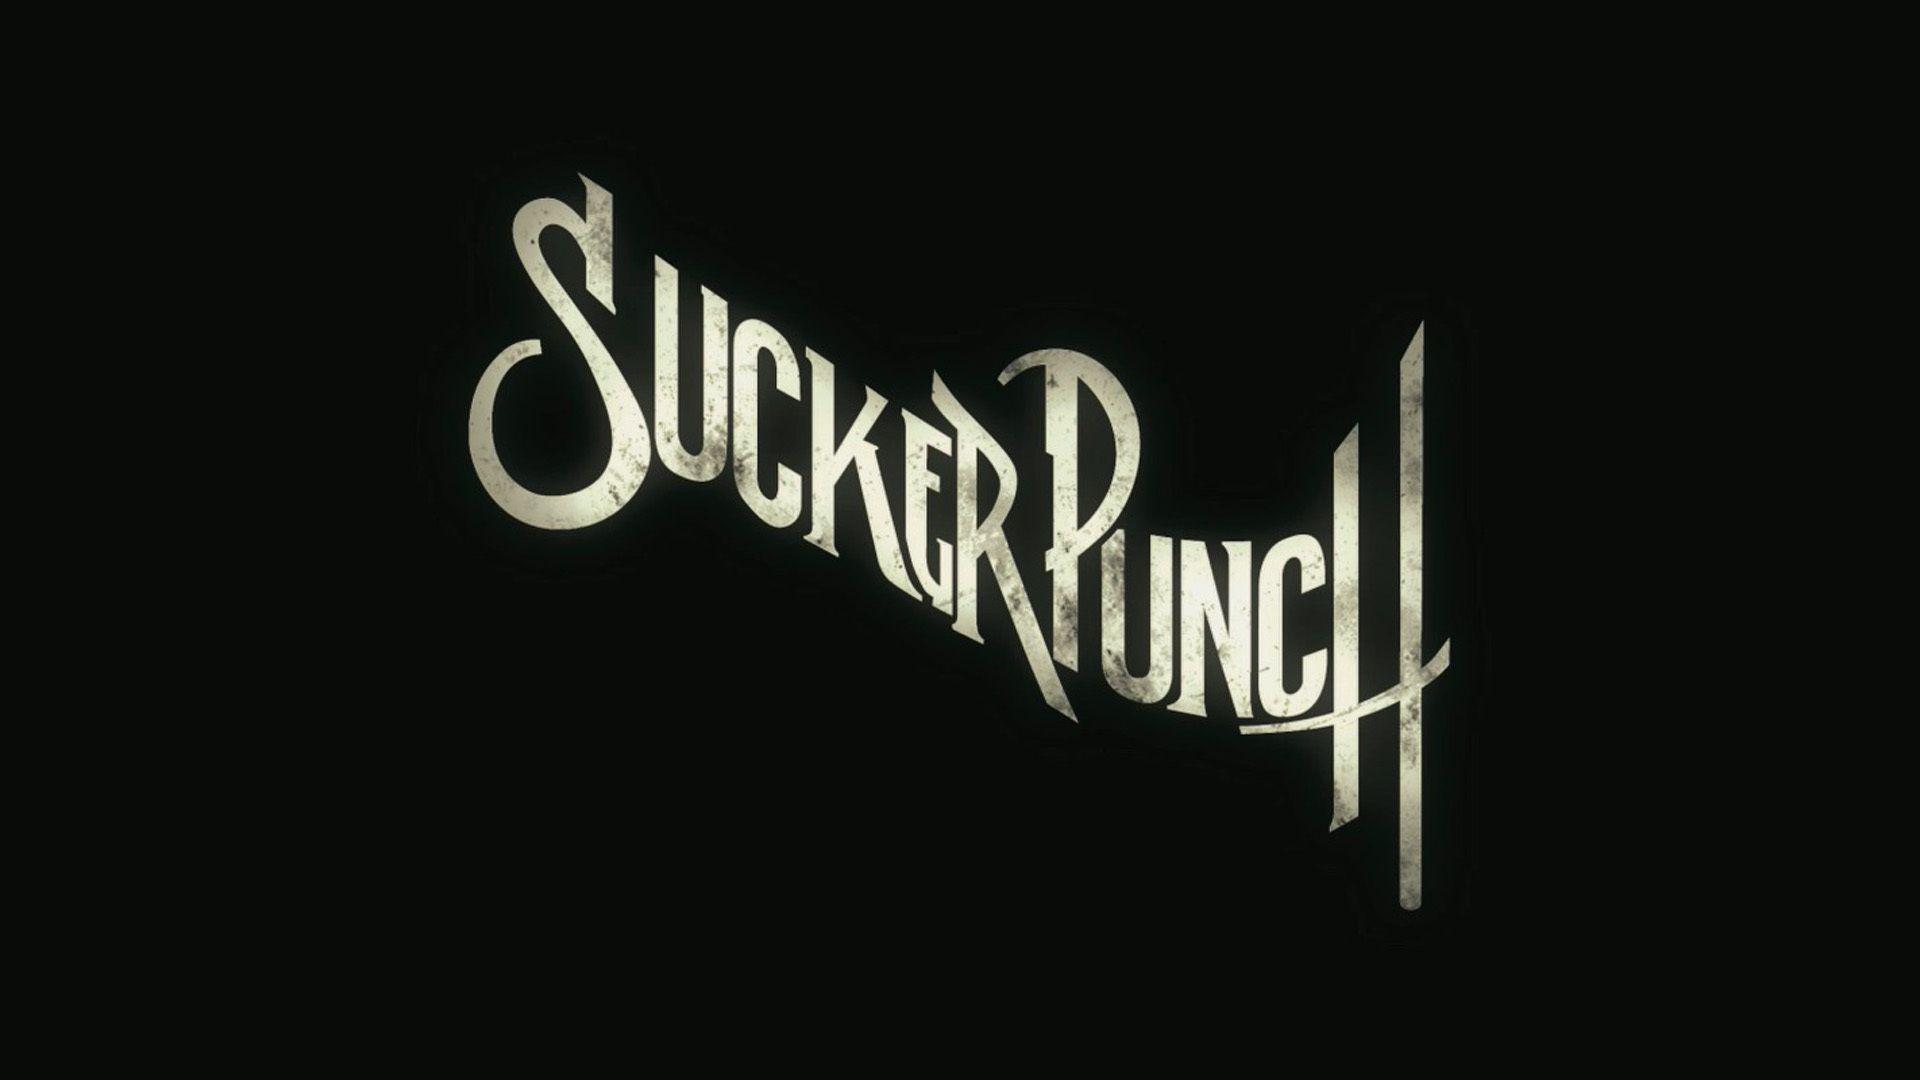 Sucker Punch Punch Wallpaper